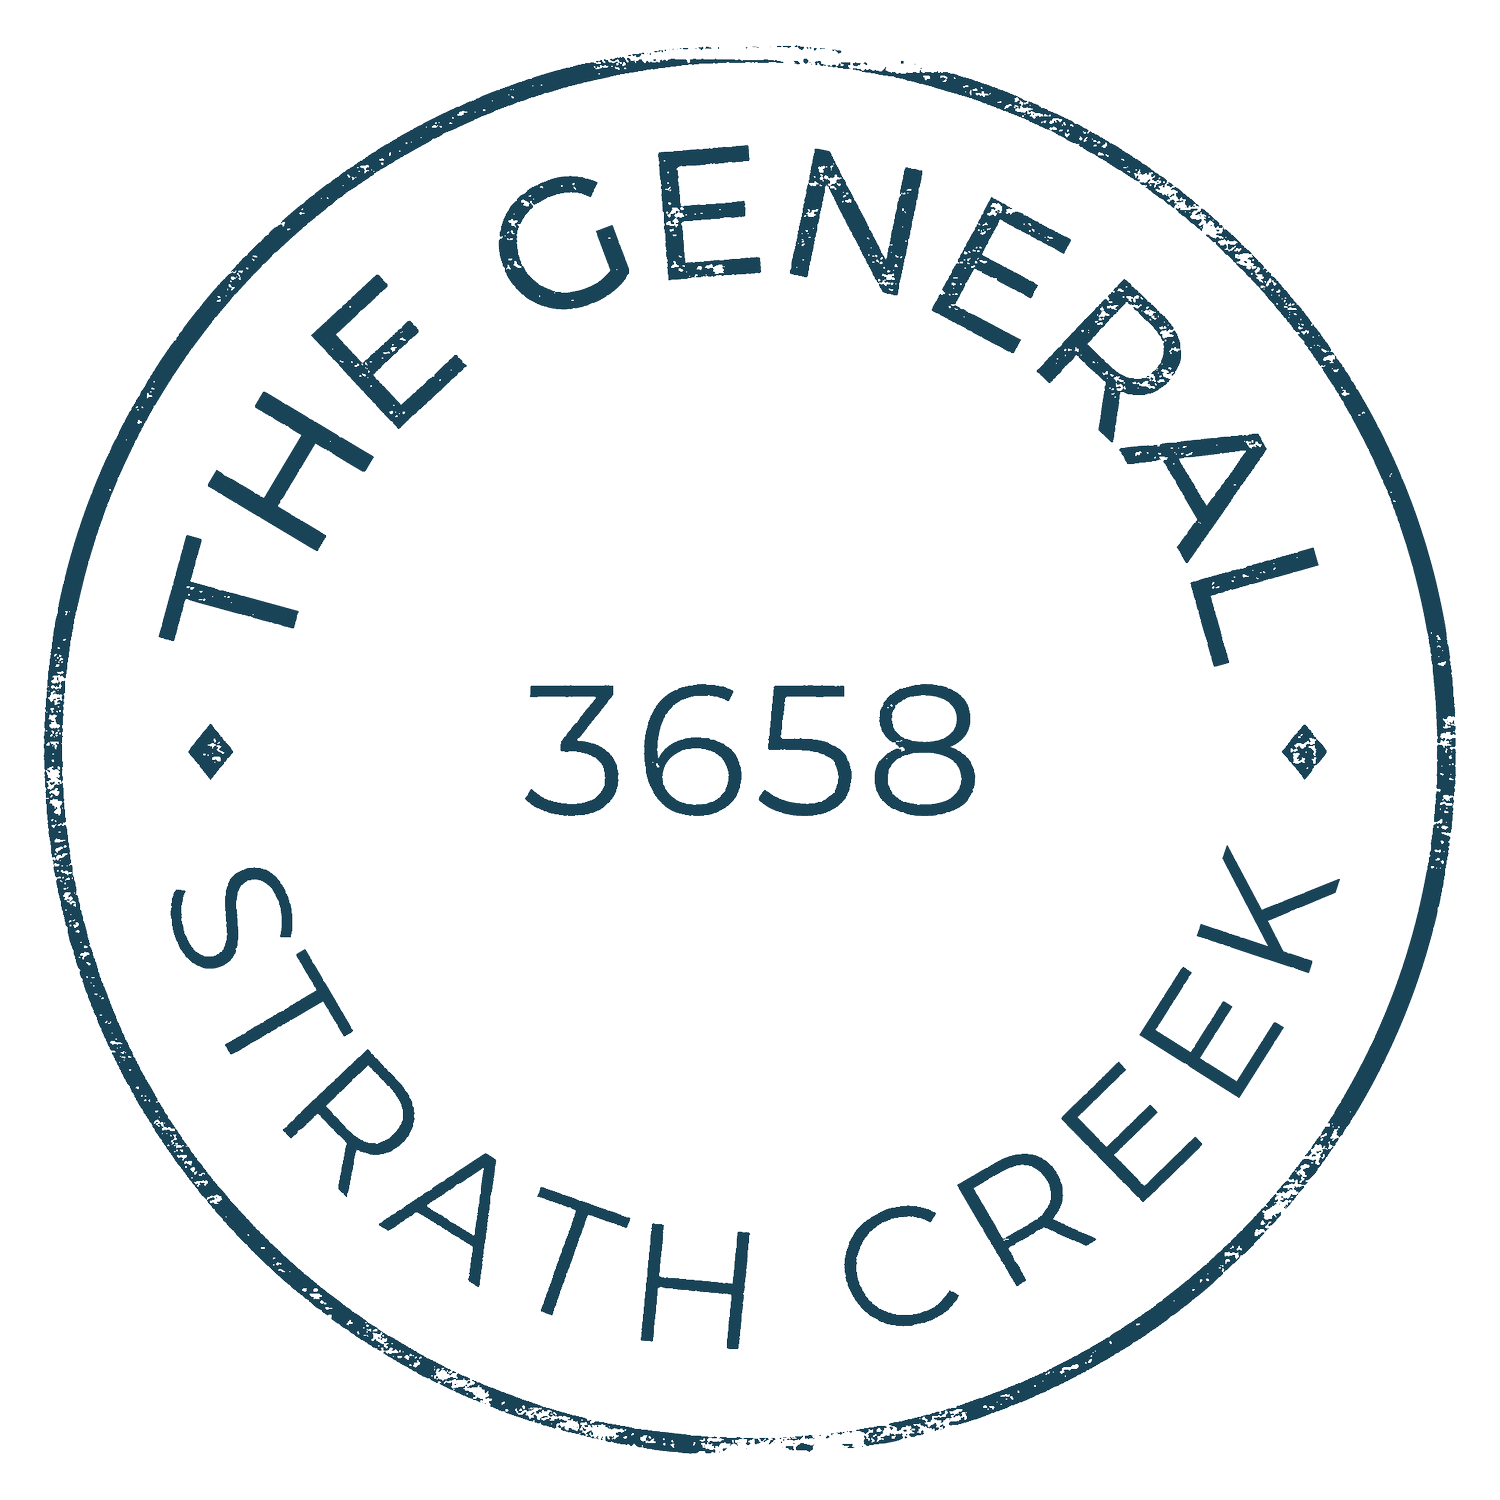 The General Strath Creek